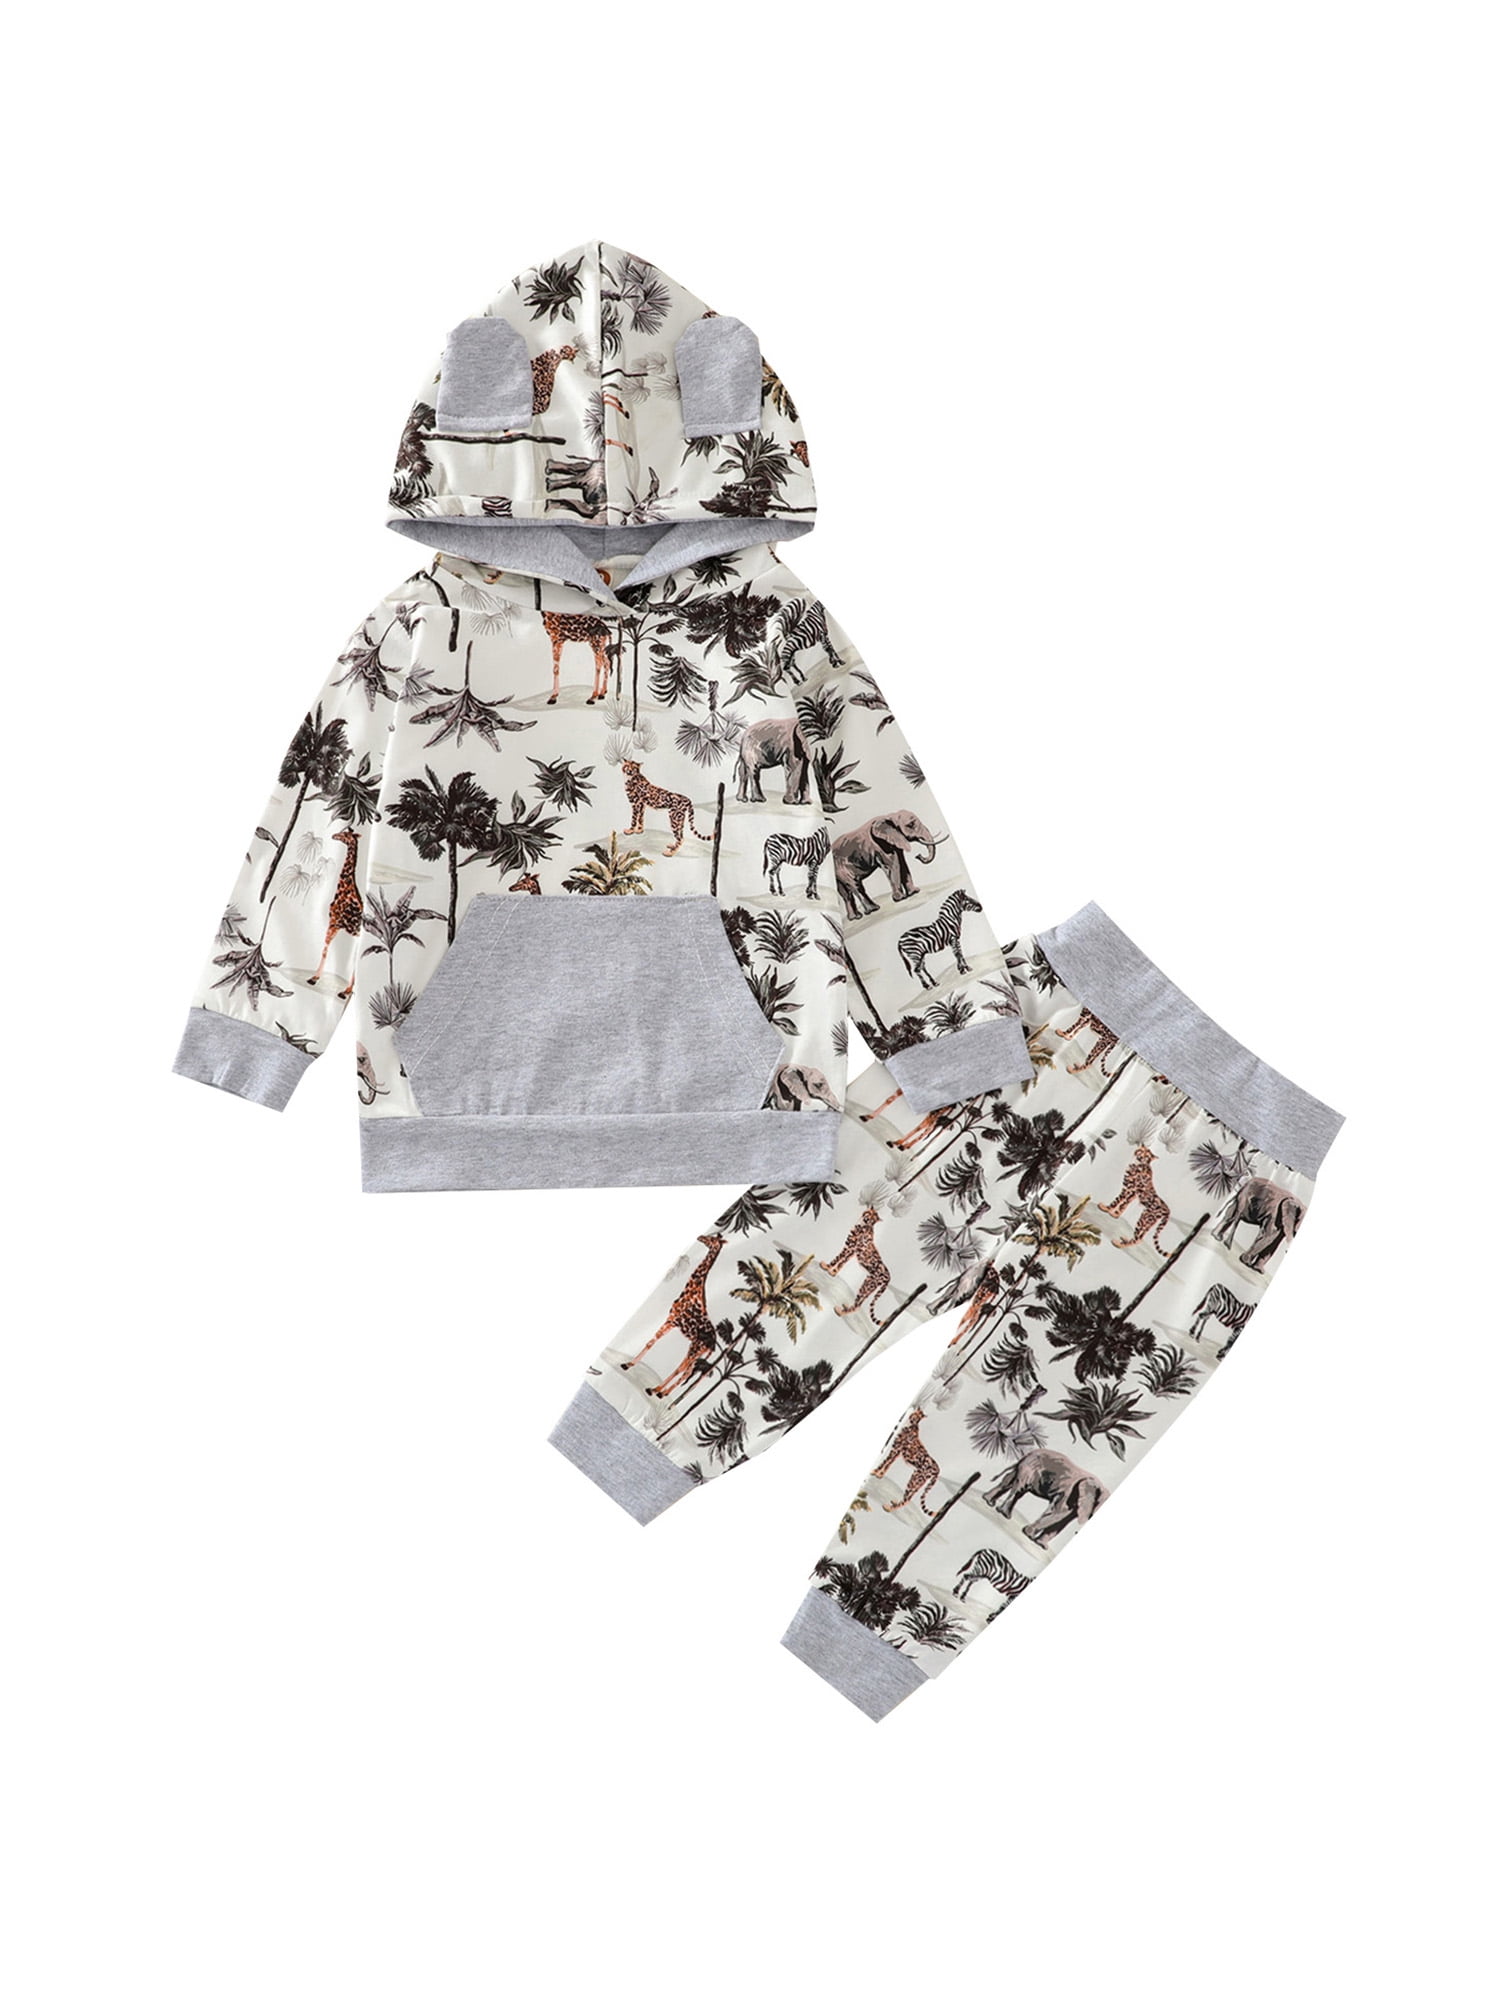 Toddler Baby Boy Girl Hoodie Outfits Set Long Sleeve Hooded Sweatshirt Tops+Pant 2pcs 